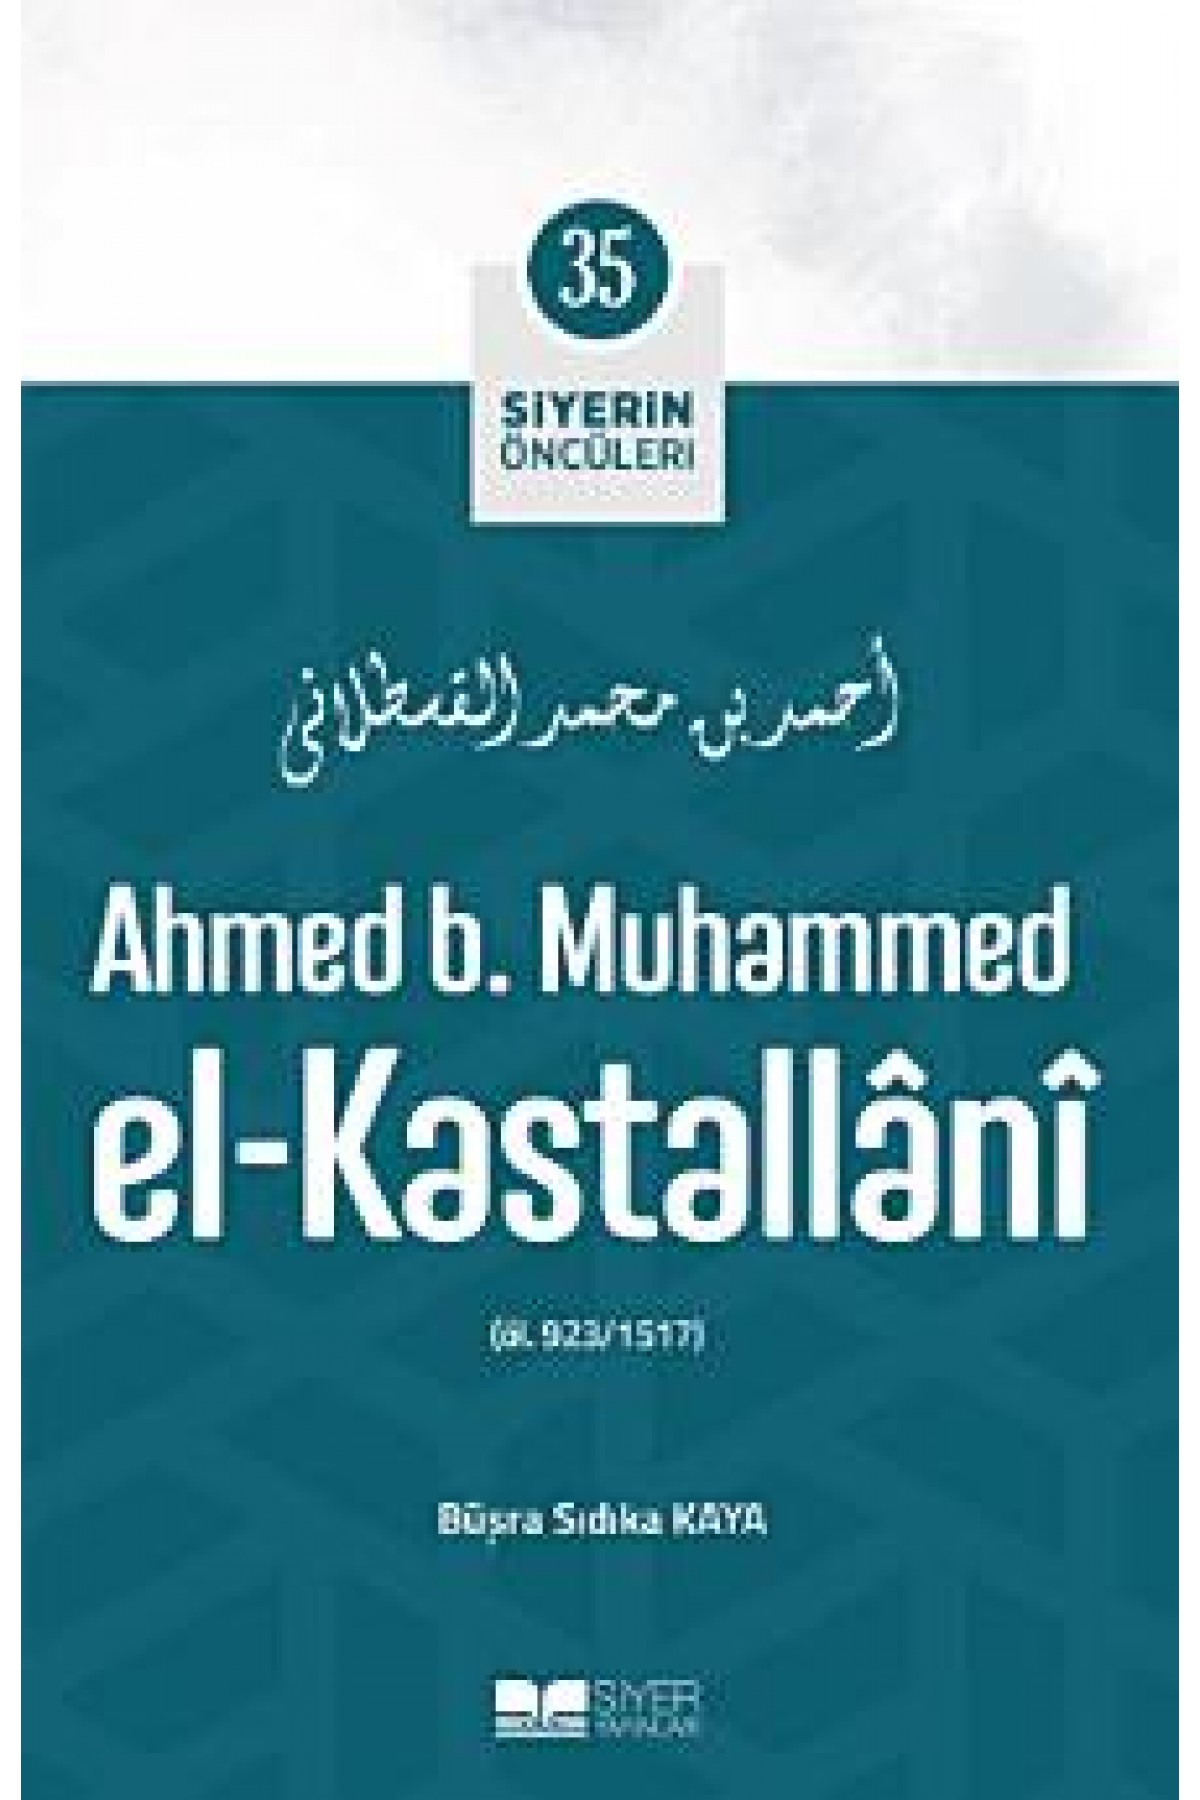 Ahmed B. Muhammed El-Kastallani; Siyerin Öncüleri 35